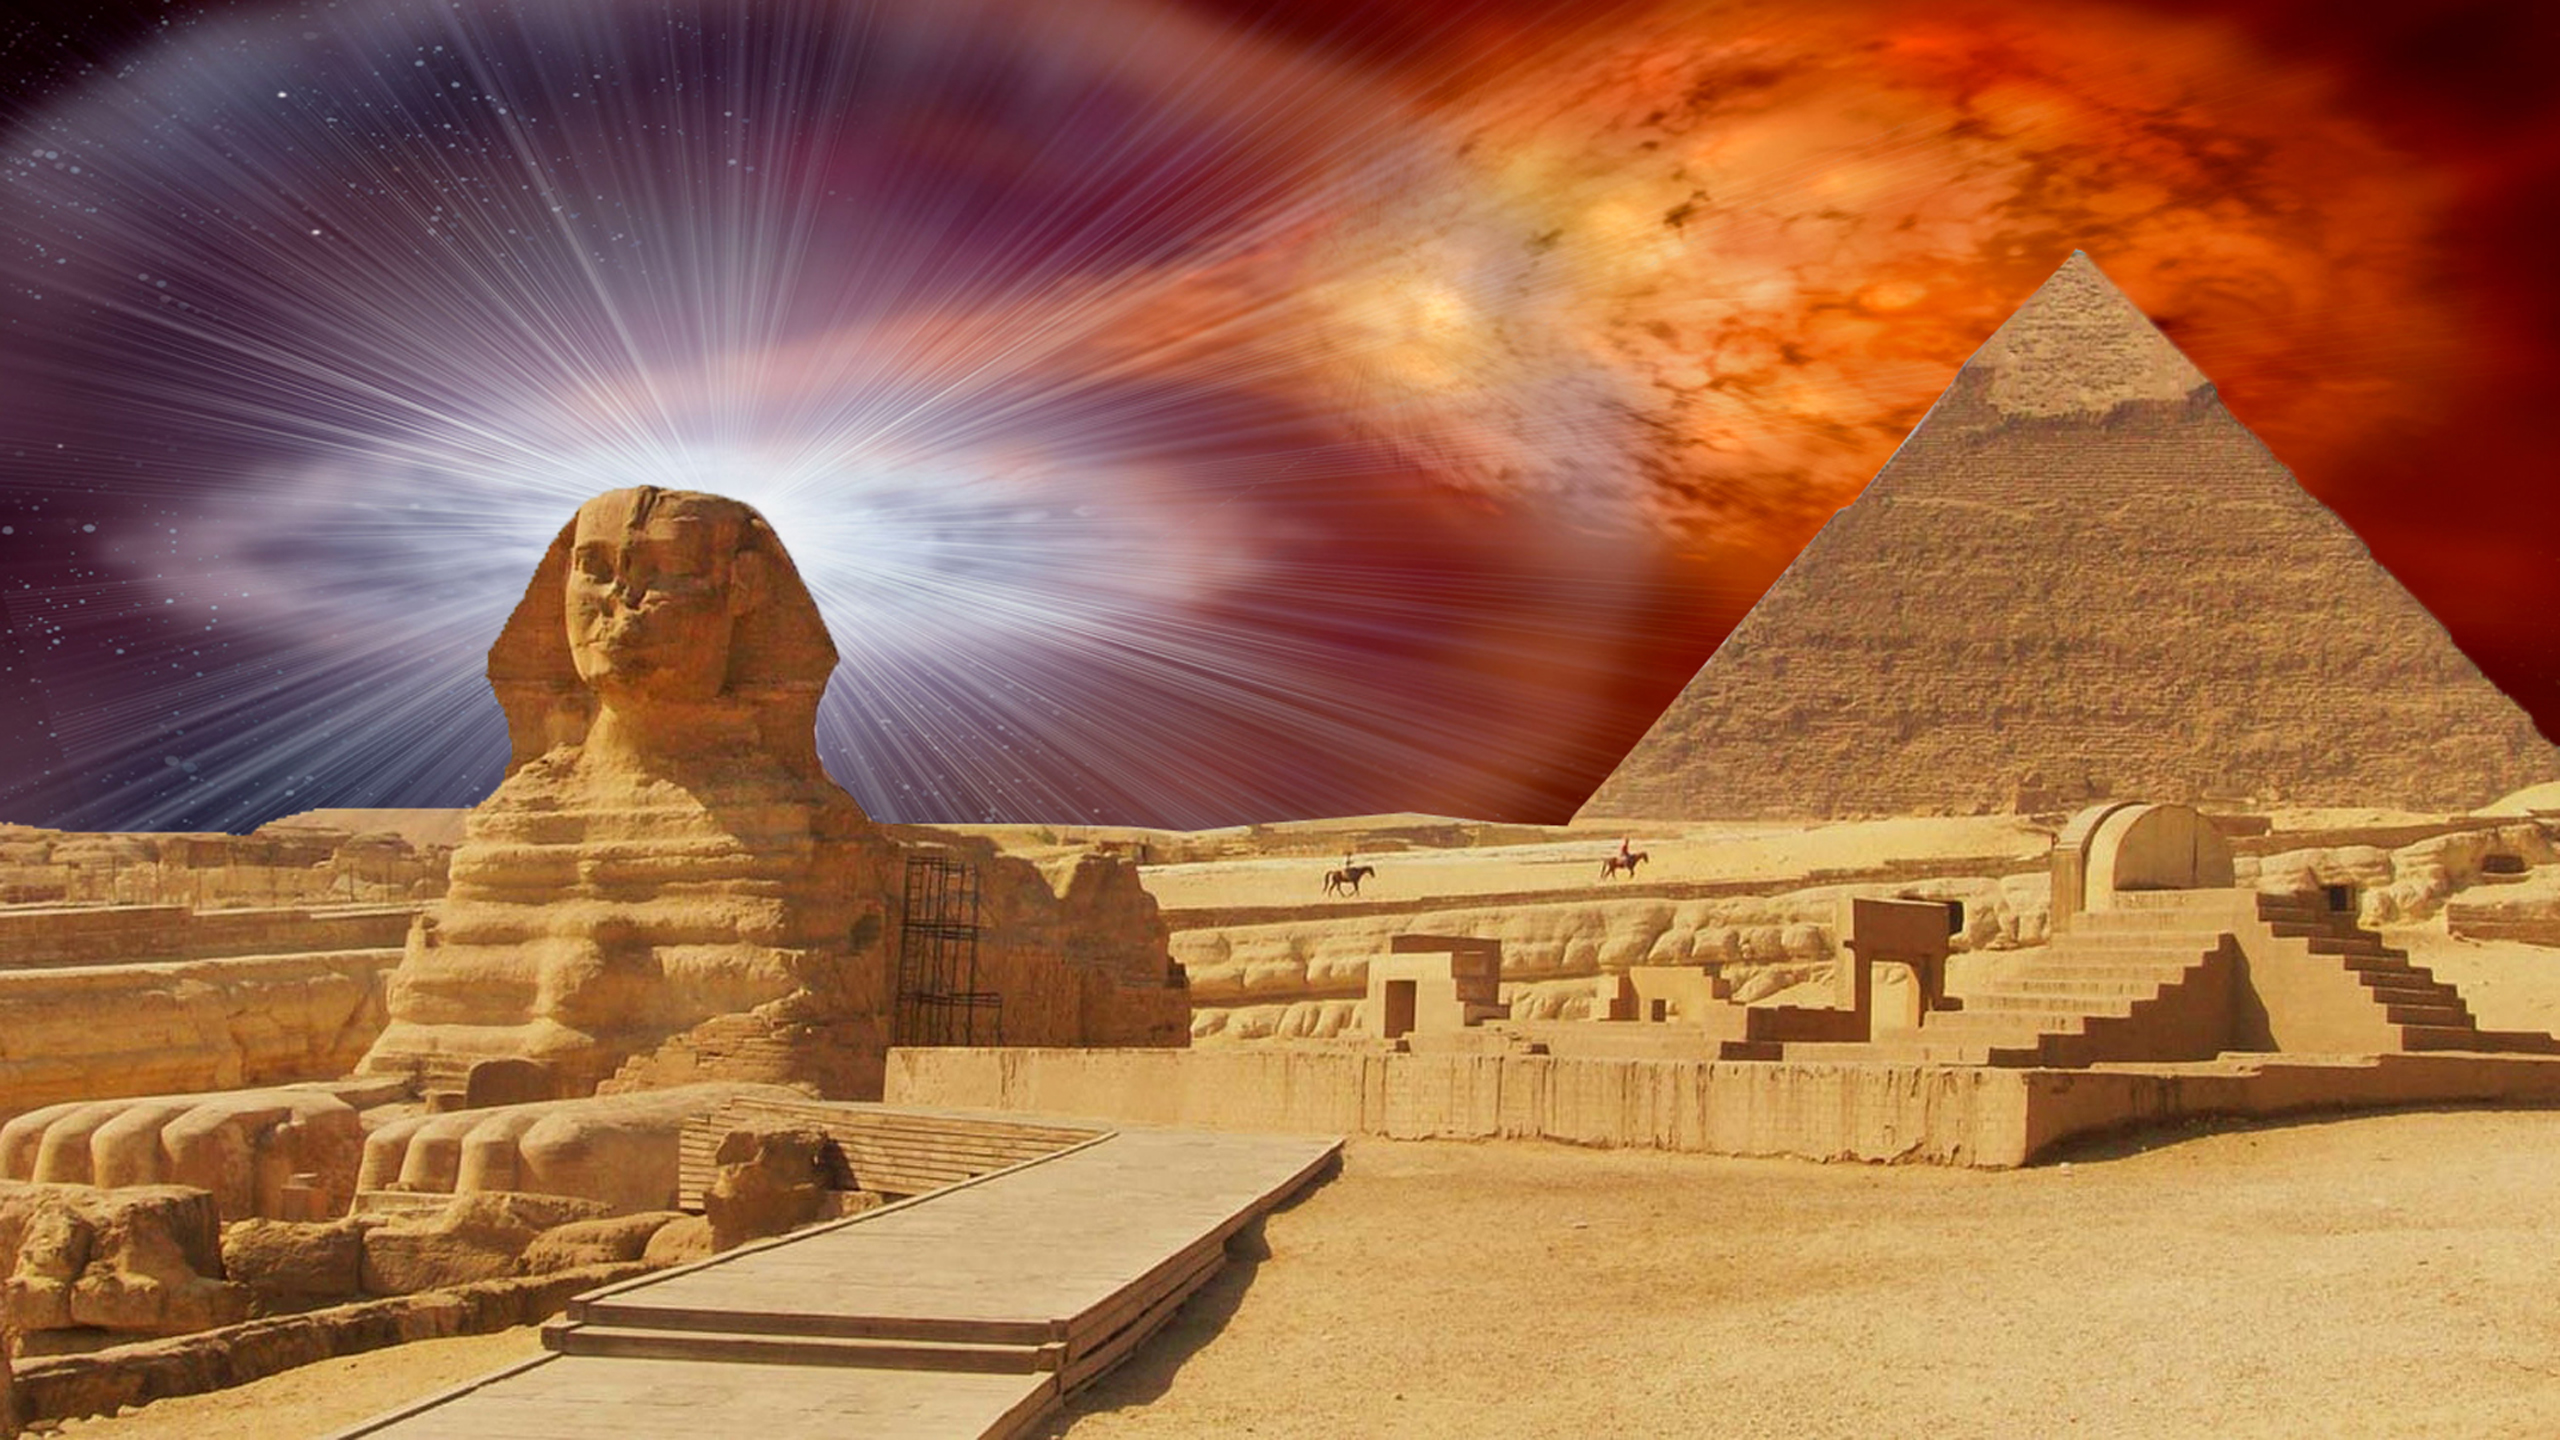 Egypt Pyramid The Great Sphinx of Giza with the Pyramid of Khafra in the background Desktop Wallapepr for Mobile phones Tablet and PC 2560x1440 - Եգիպտական բուրգերի առեղծվածը